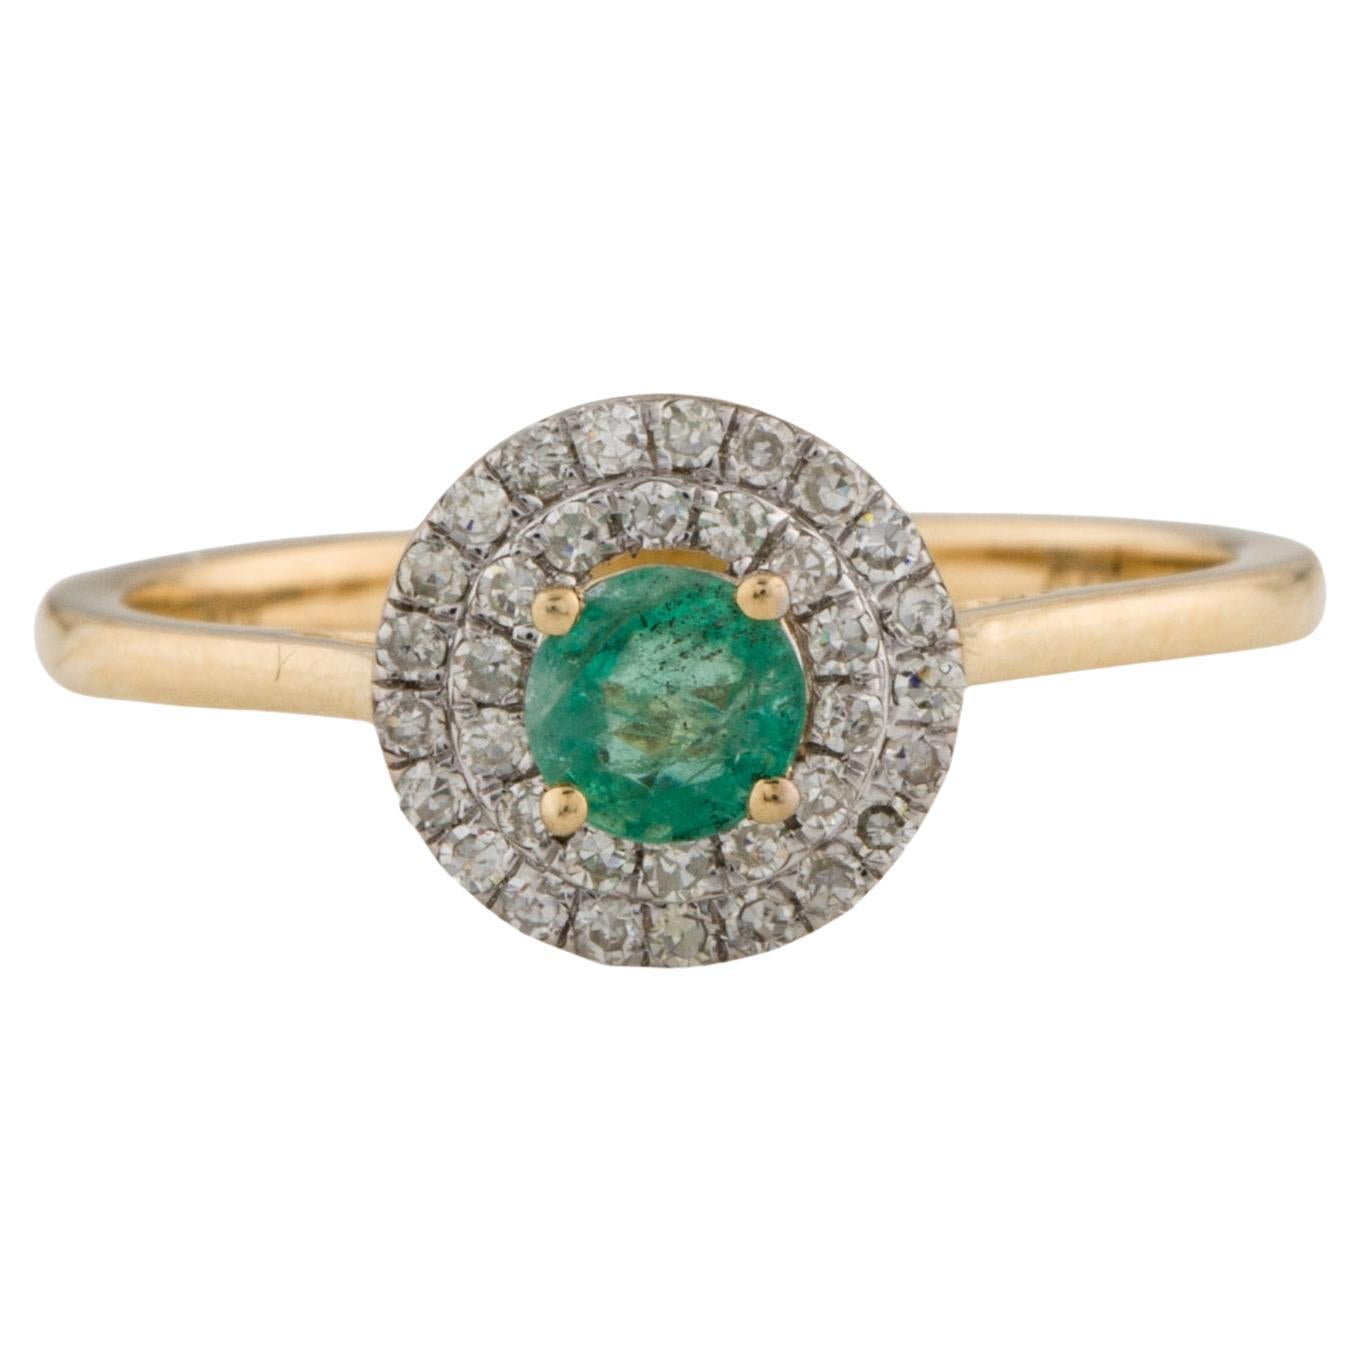 Elegant 14K Emerald & Diamond Cocktail Ring - Size 6.5  Vintage Gemstone Ring For Sale